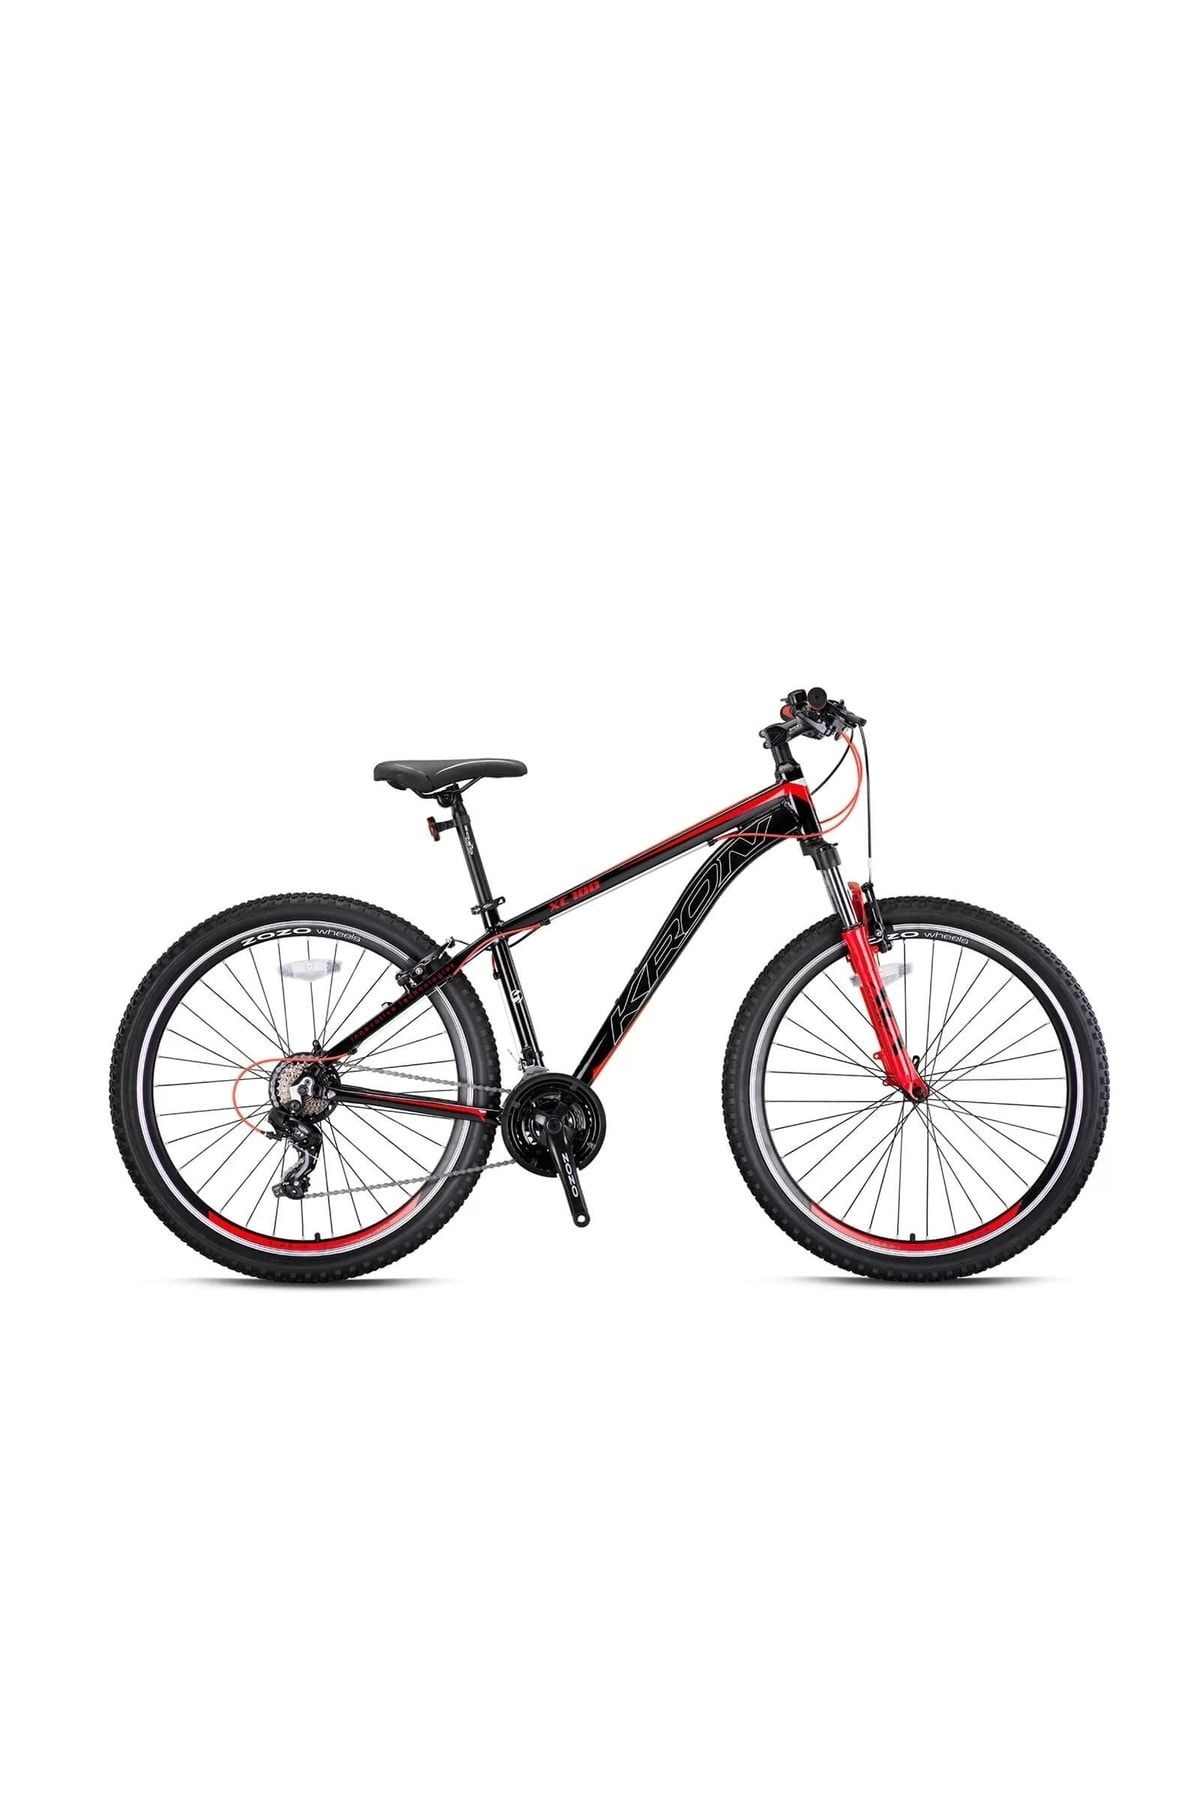 Kron Xc100 27.5 V 20 Kadro Erkek Dağ Bisikleti Siyah-kırmızı